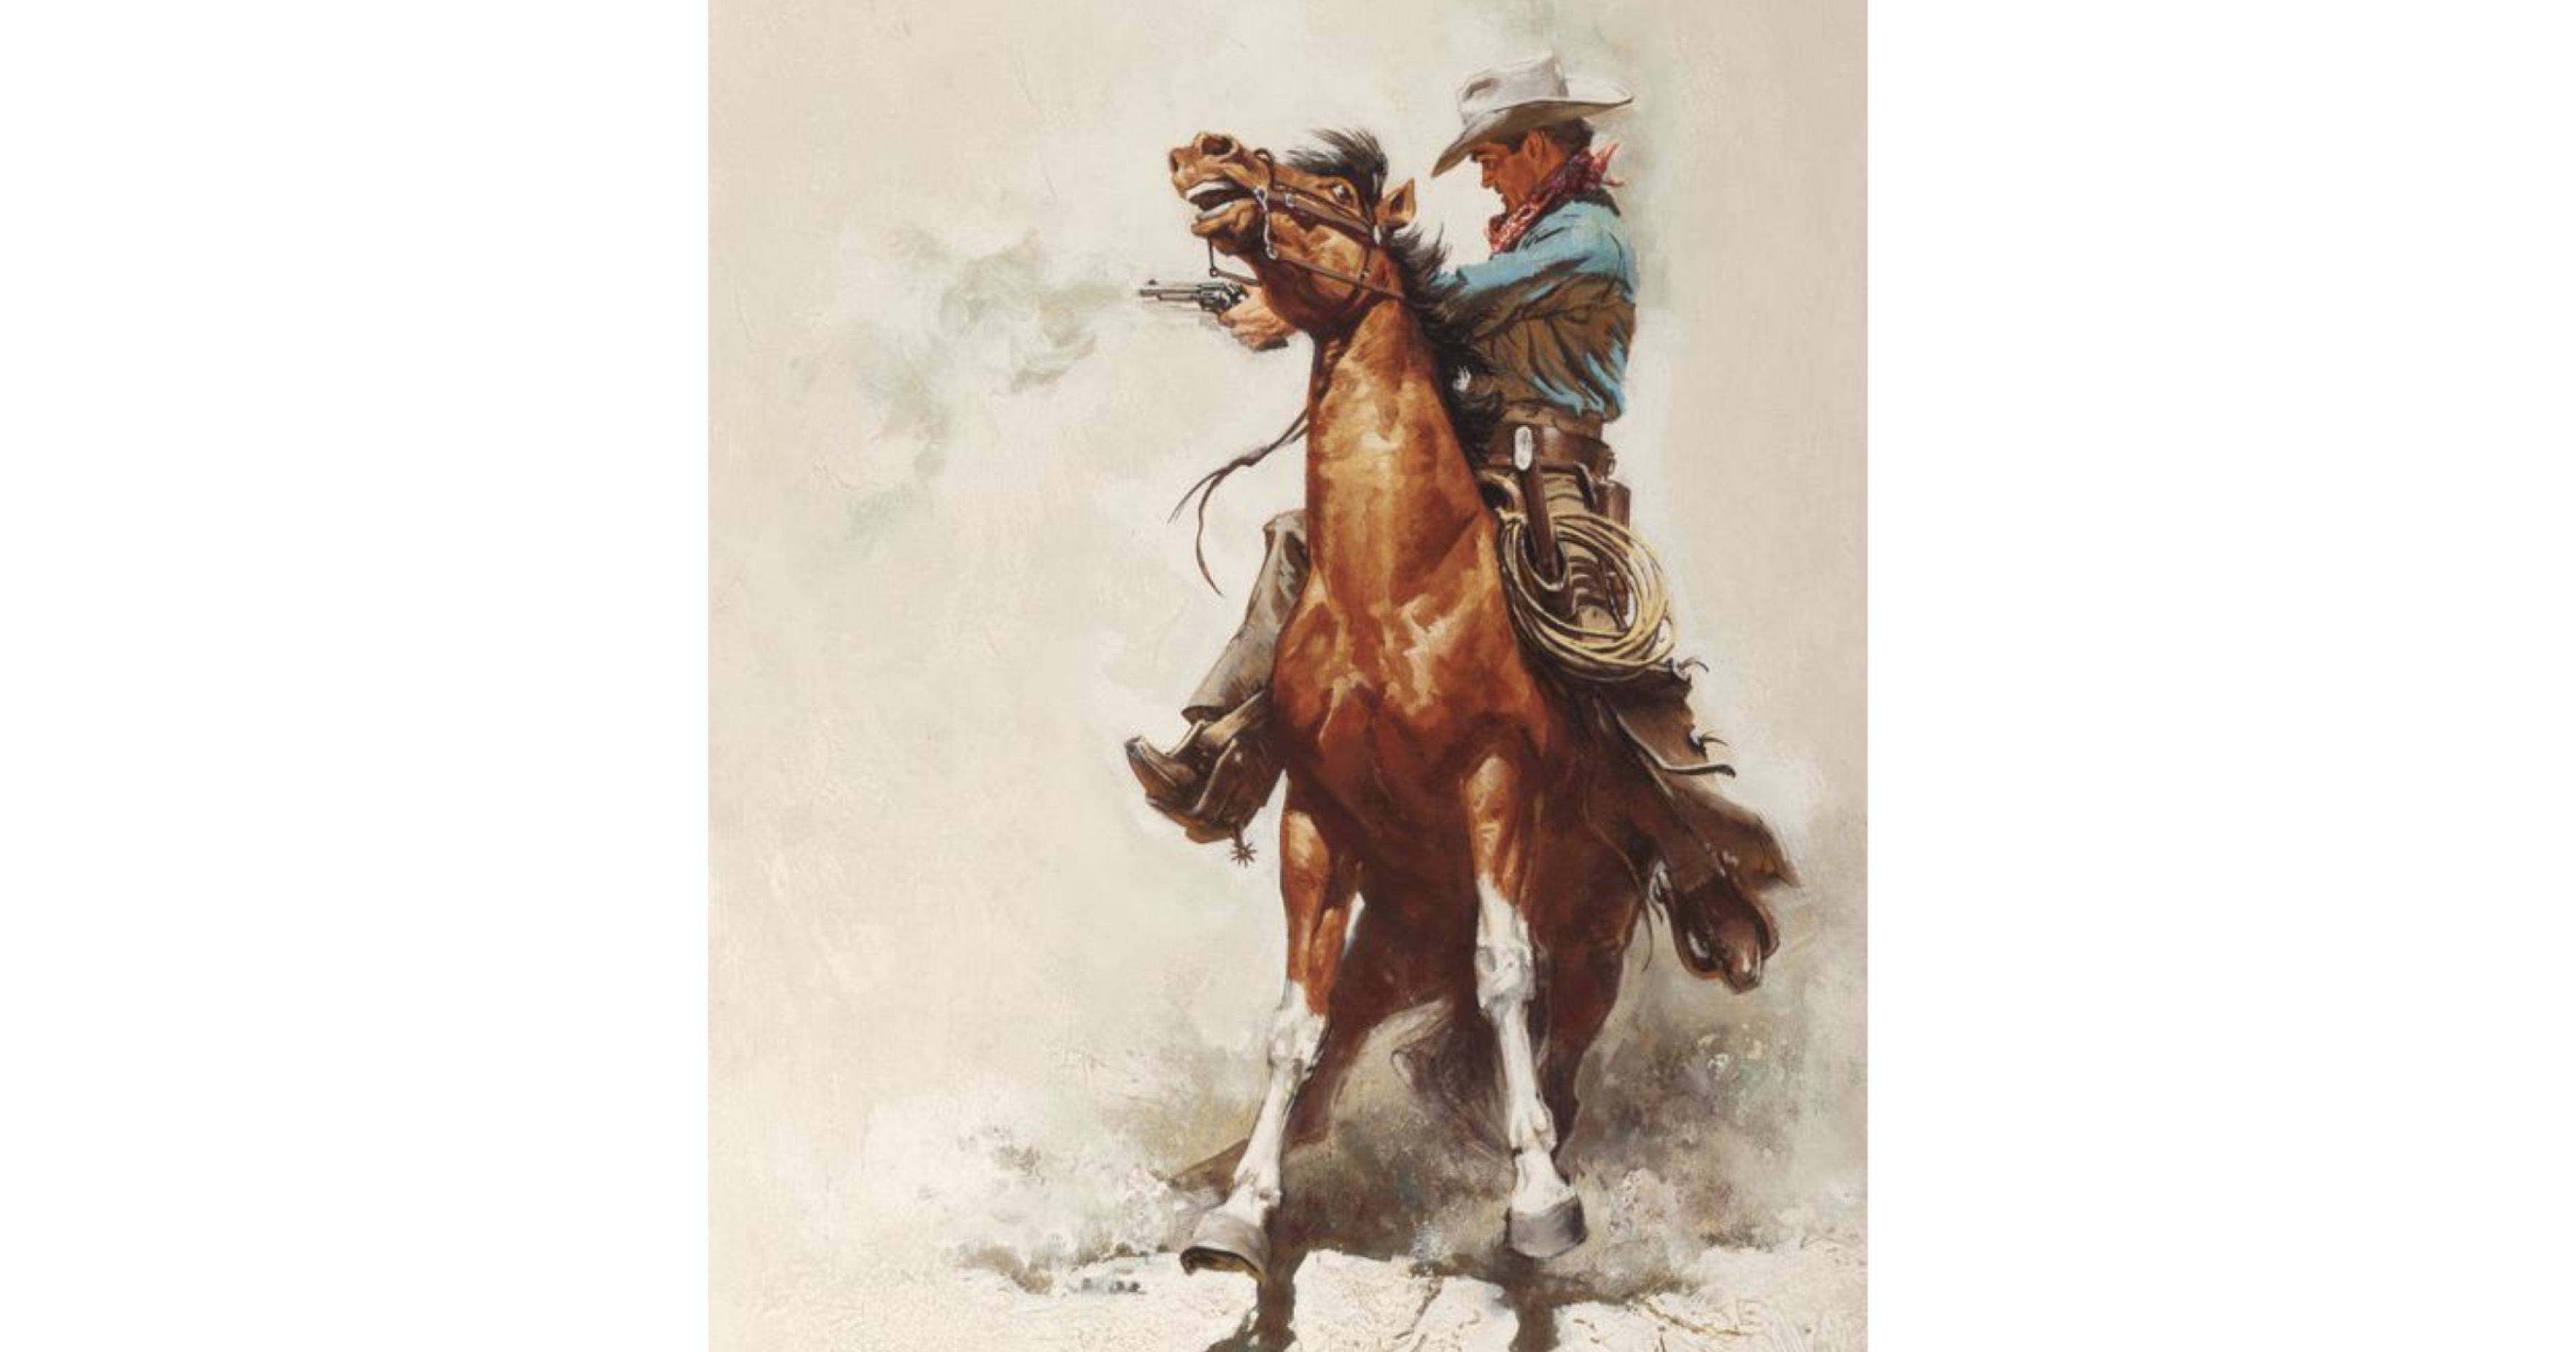 A cowboy riding a bucking brown horse